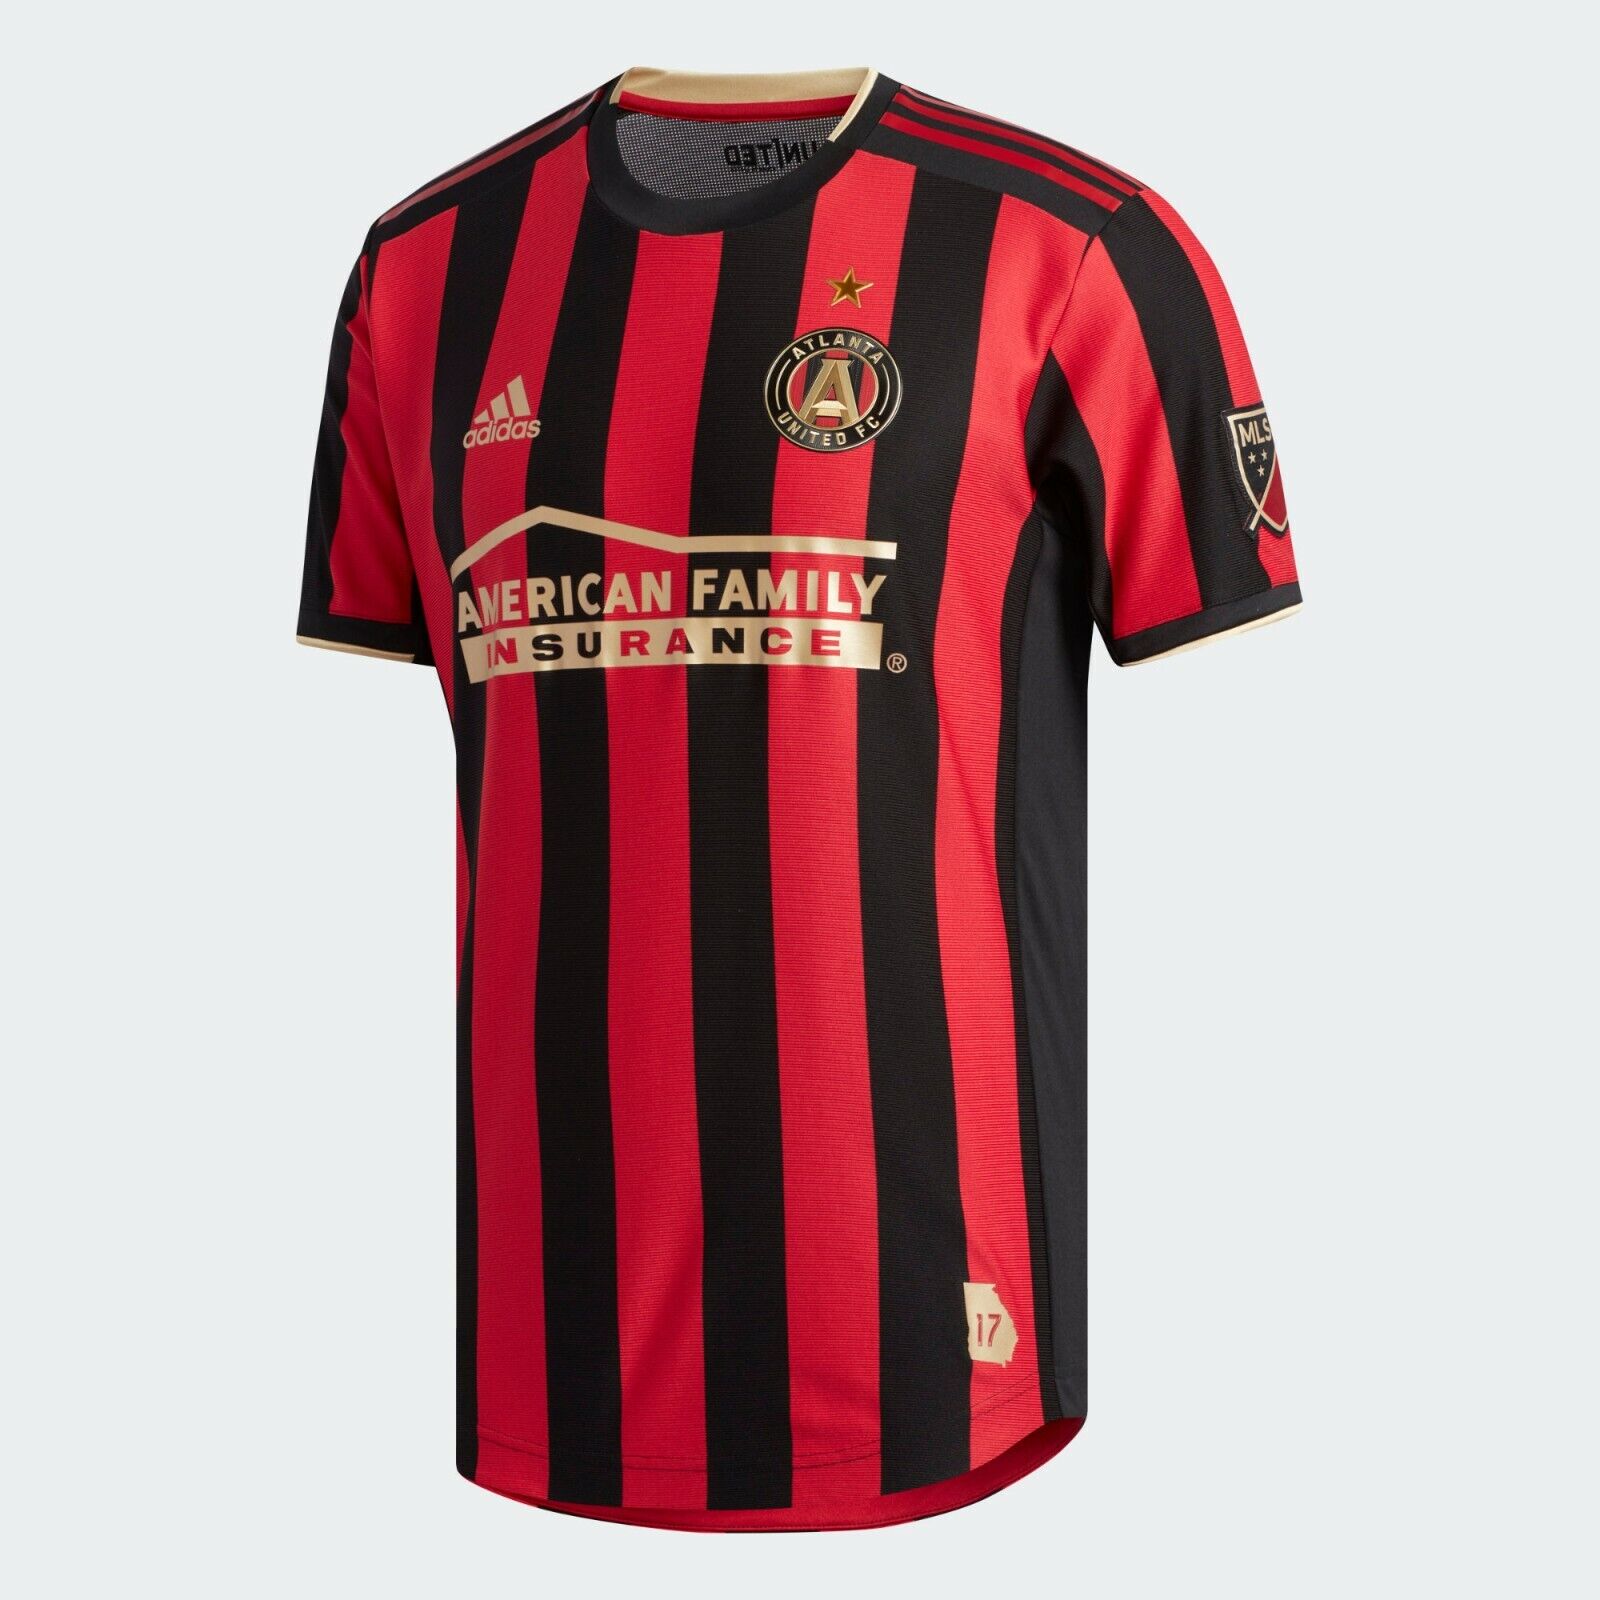 atlanta united 2018 jersey